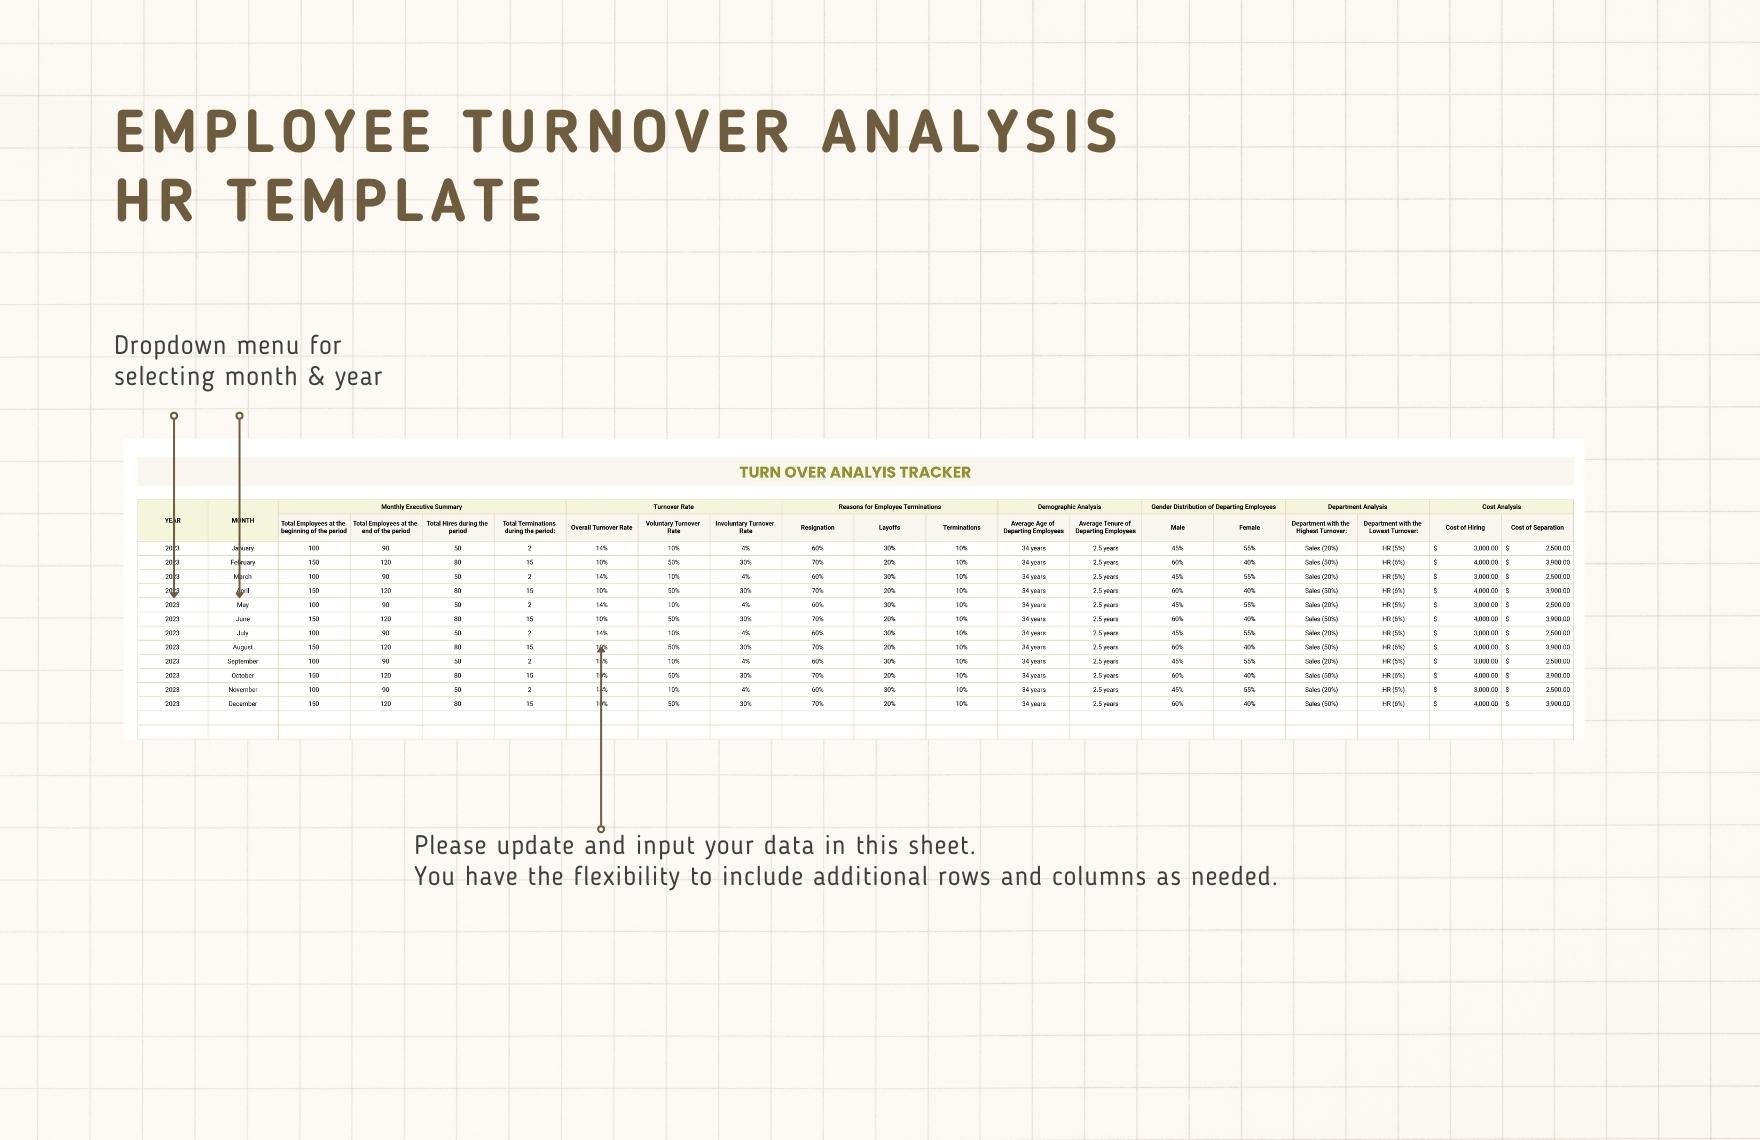 Employee Turnover Analysis HR Template